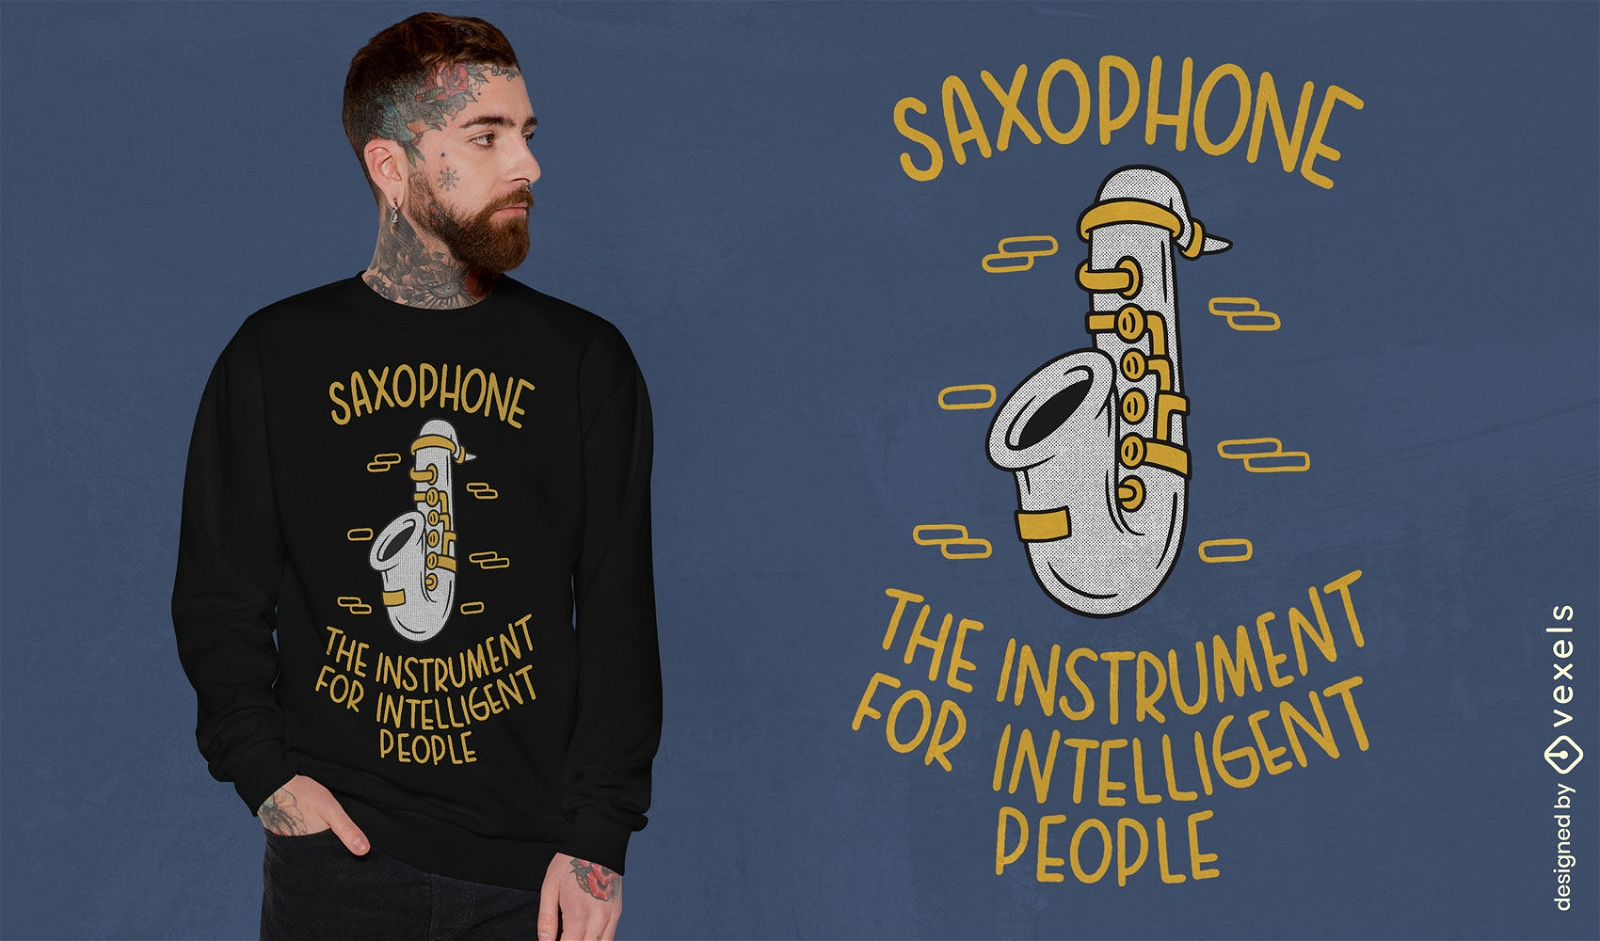 Design de camiseta de instrumento musical de saxofone